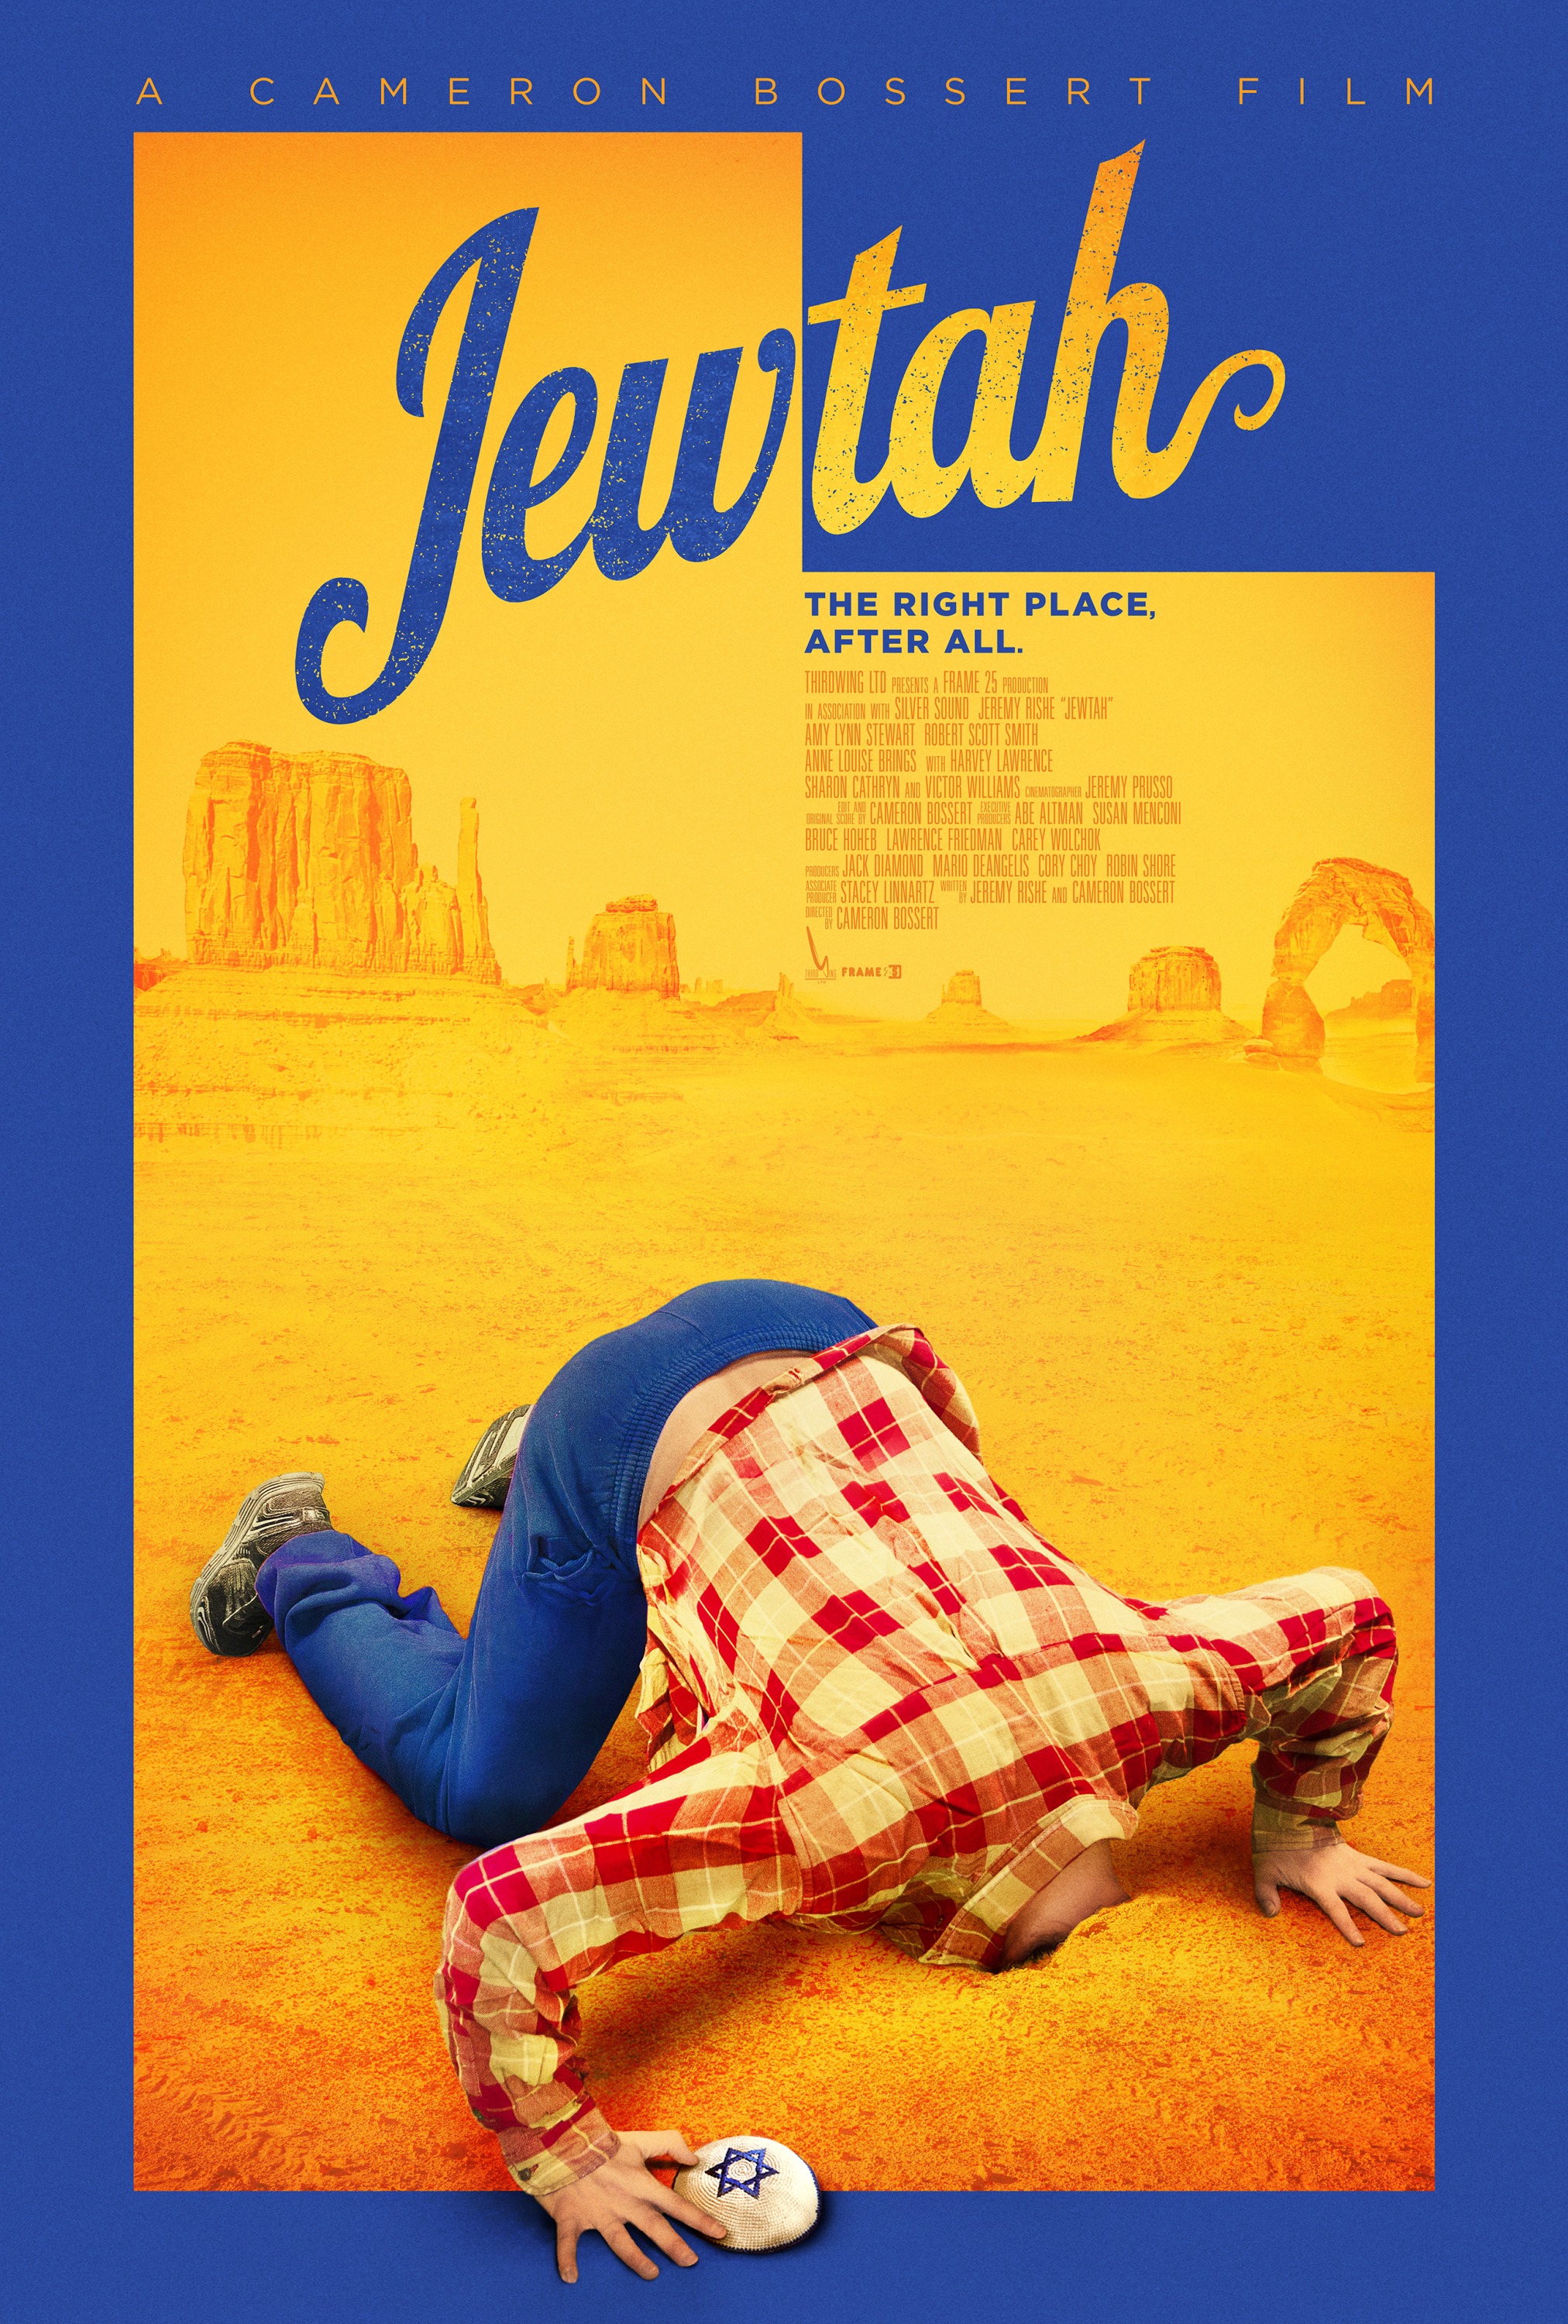 Mega Sized Movie Poster Image for Jewtah 